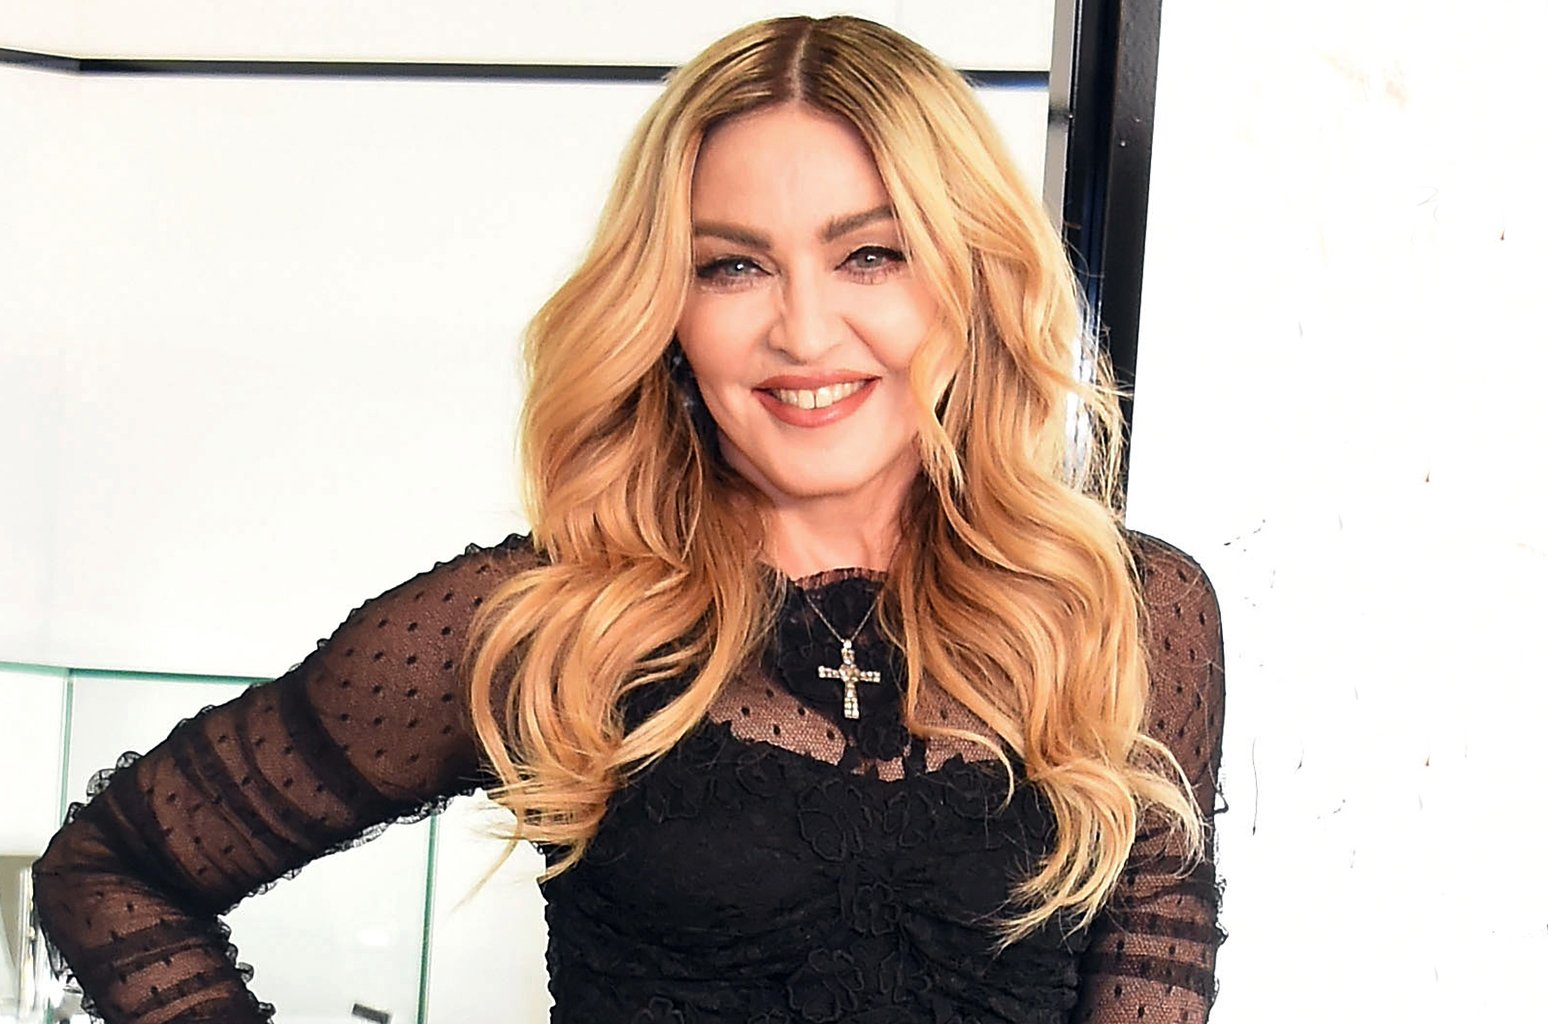 madonna feb 2016 billboard 1548.jpg?resize=1200,630 - Madonna compartilha vídeo divertidíssimo de suas filhas cantando funk